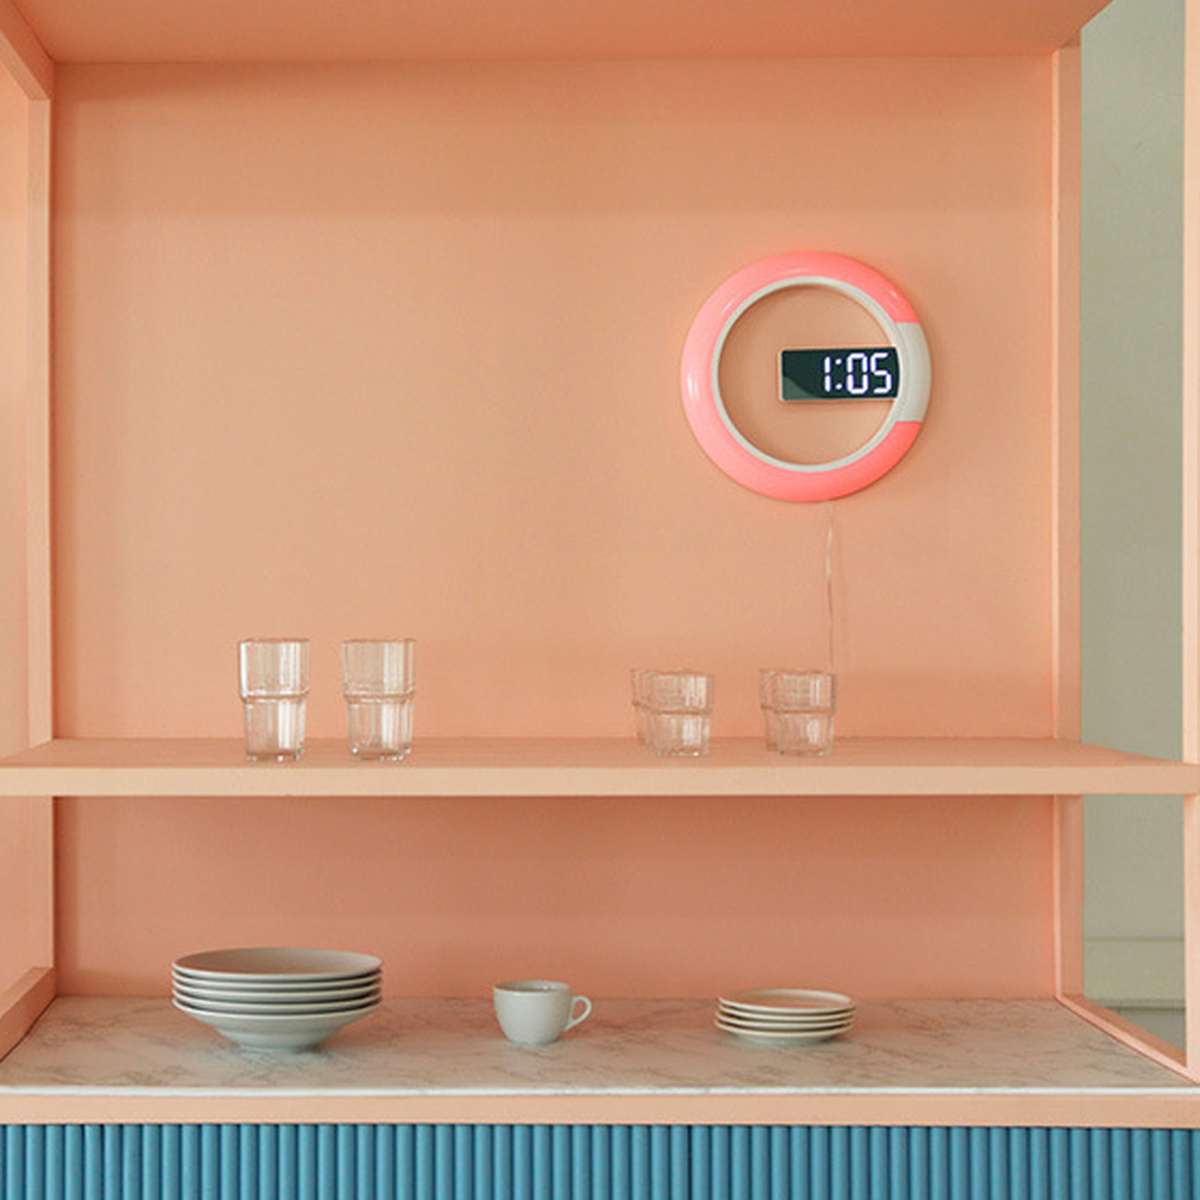 MEIGAR 3D LED Wall Clock Digital Table Clock Alarm Mirror Hollow Wall Clock Modern Nightlight Home Living Room Decoration